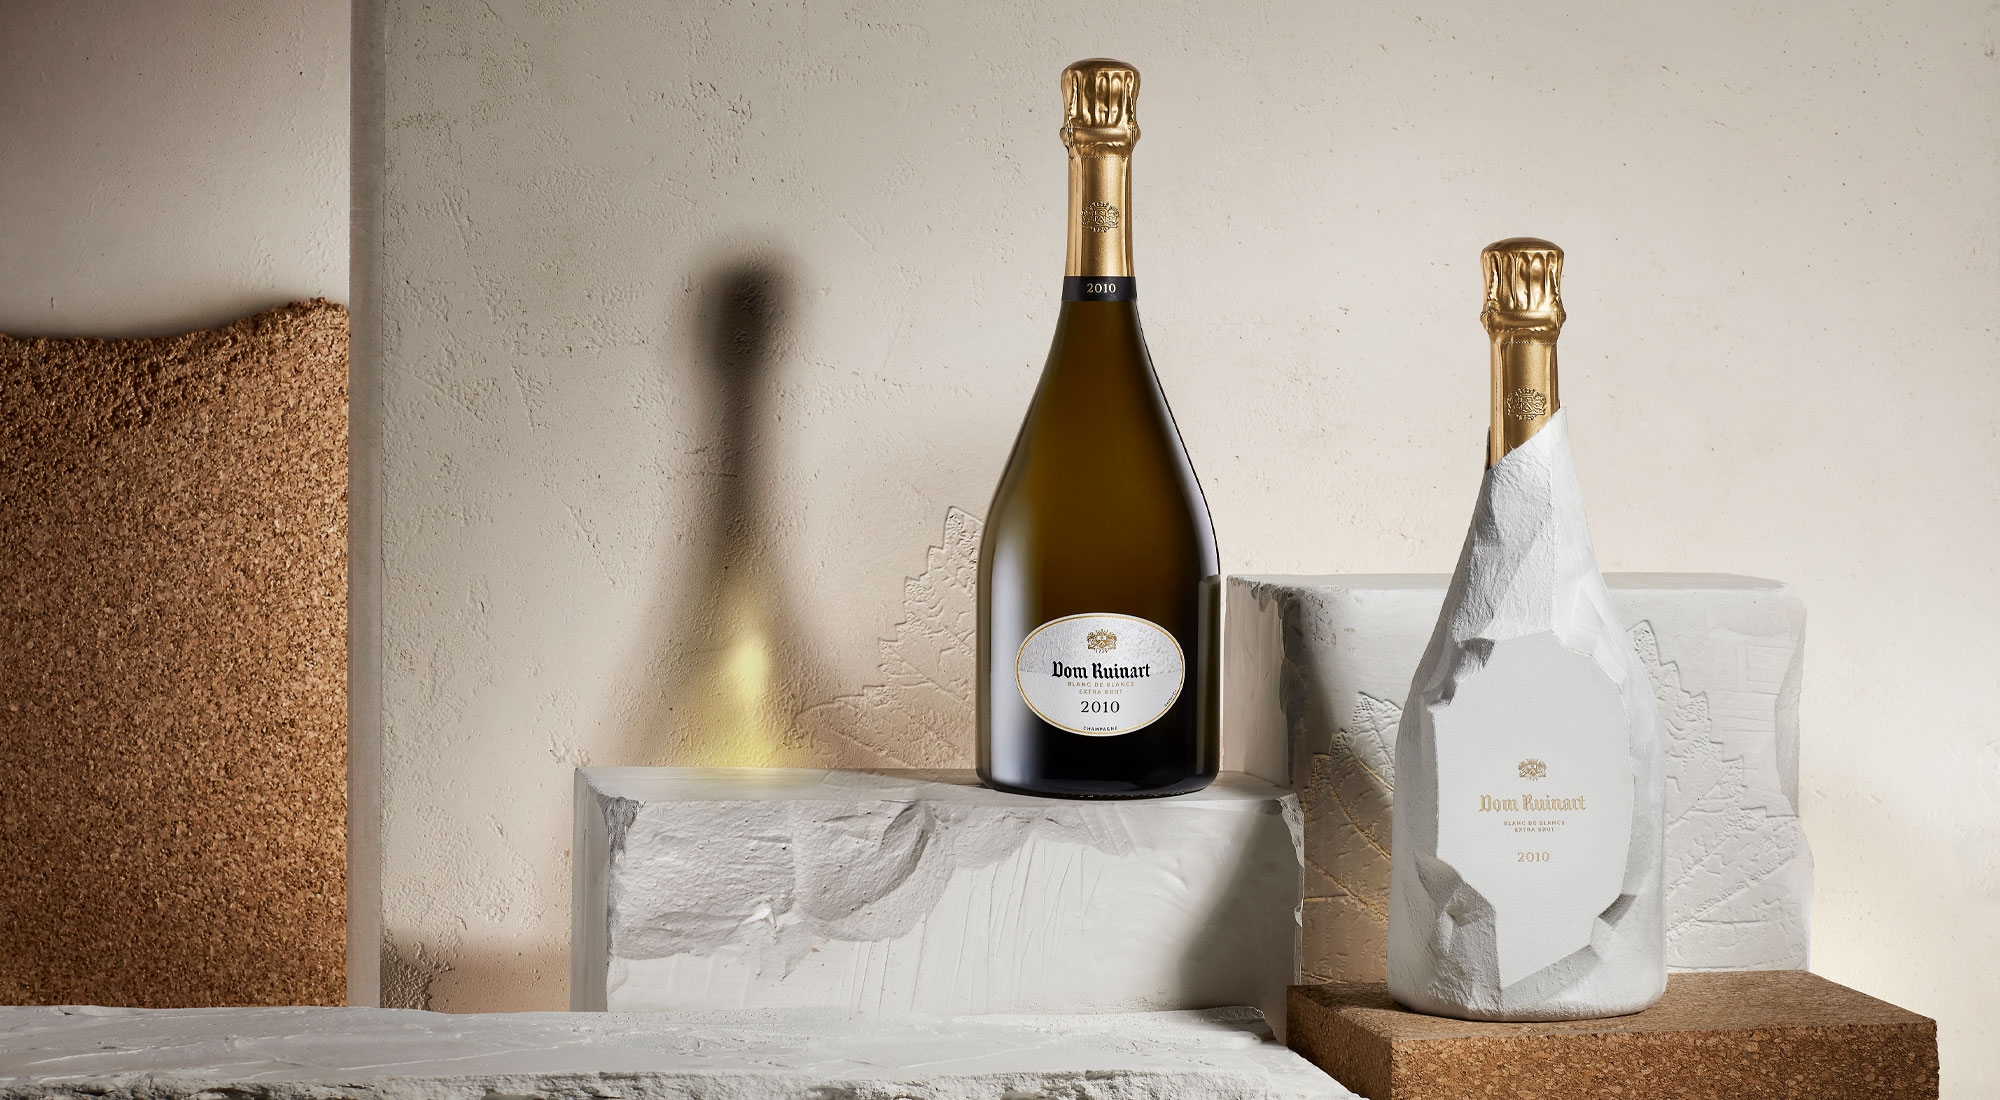 Ruinart Blanc de Blancs - Champagne Brut (Second Skin) - World